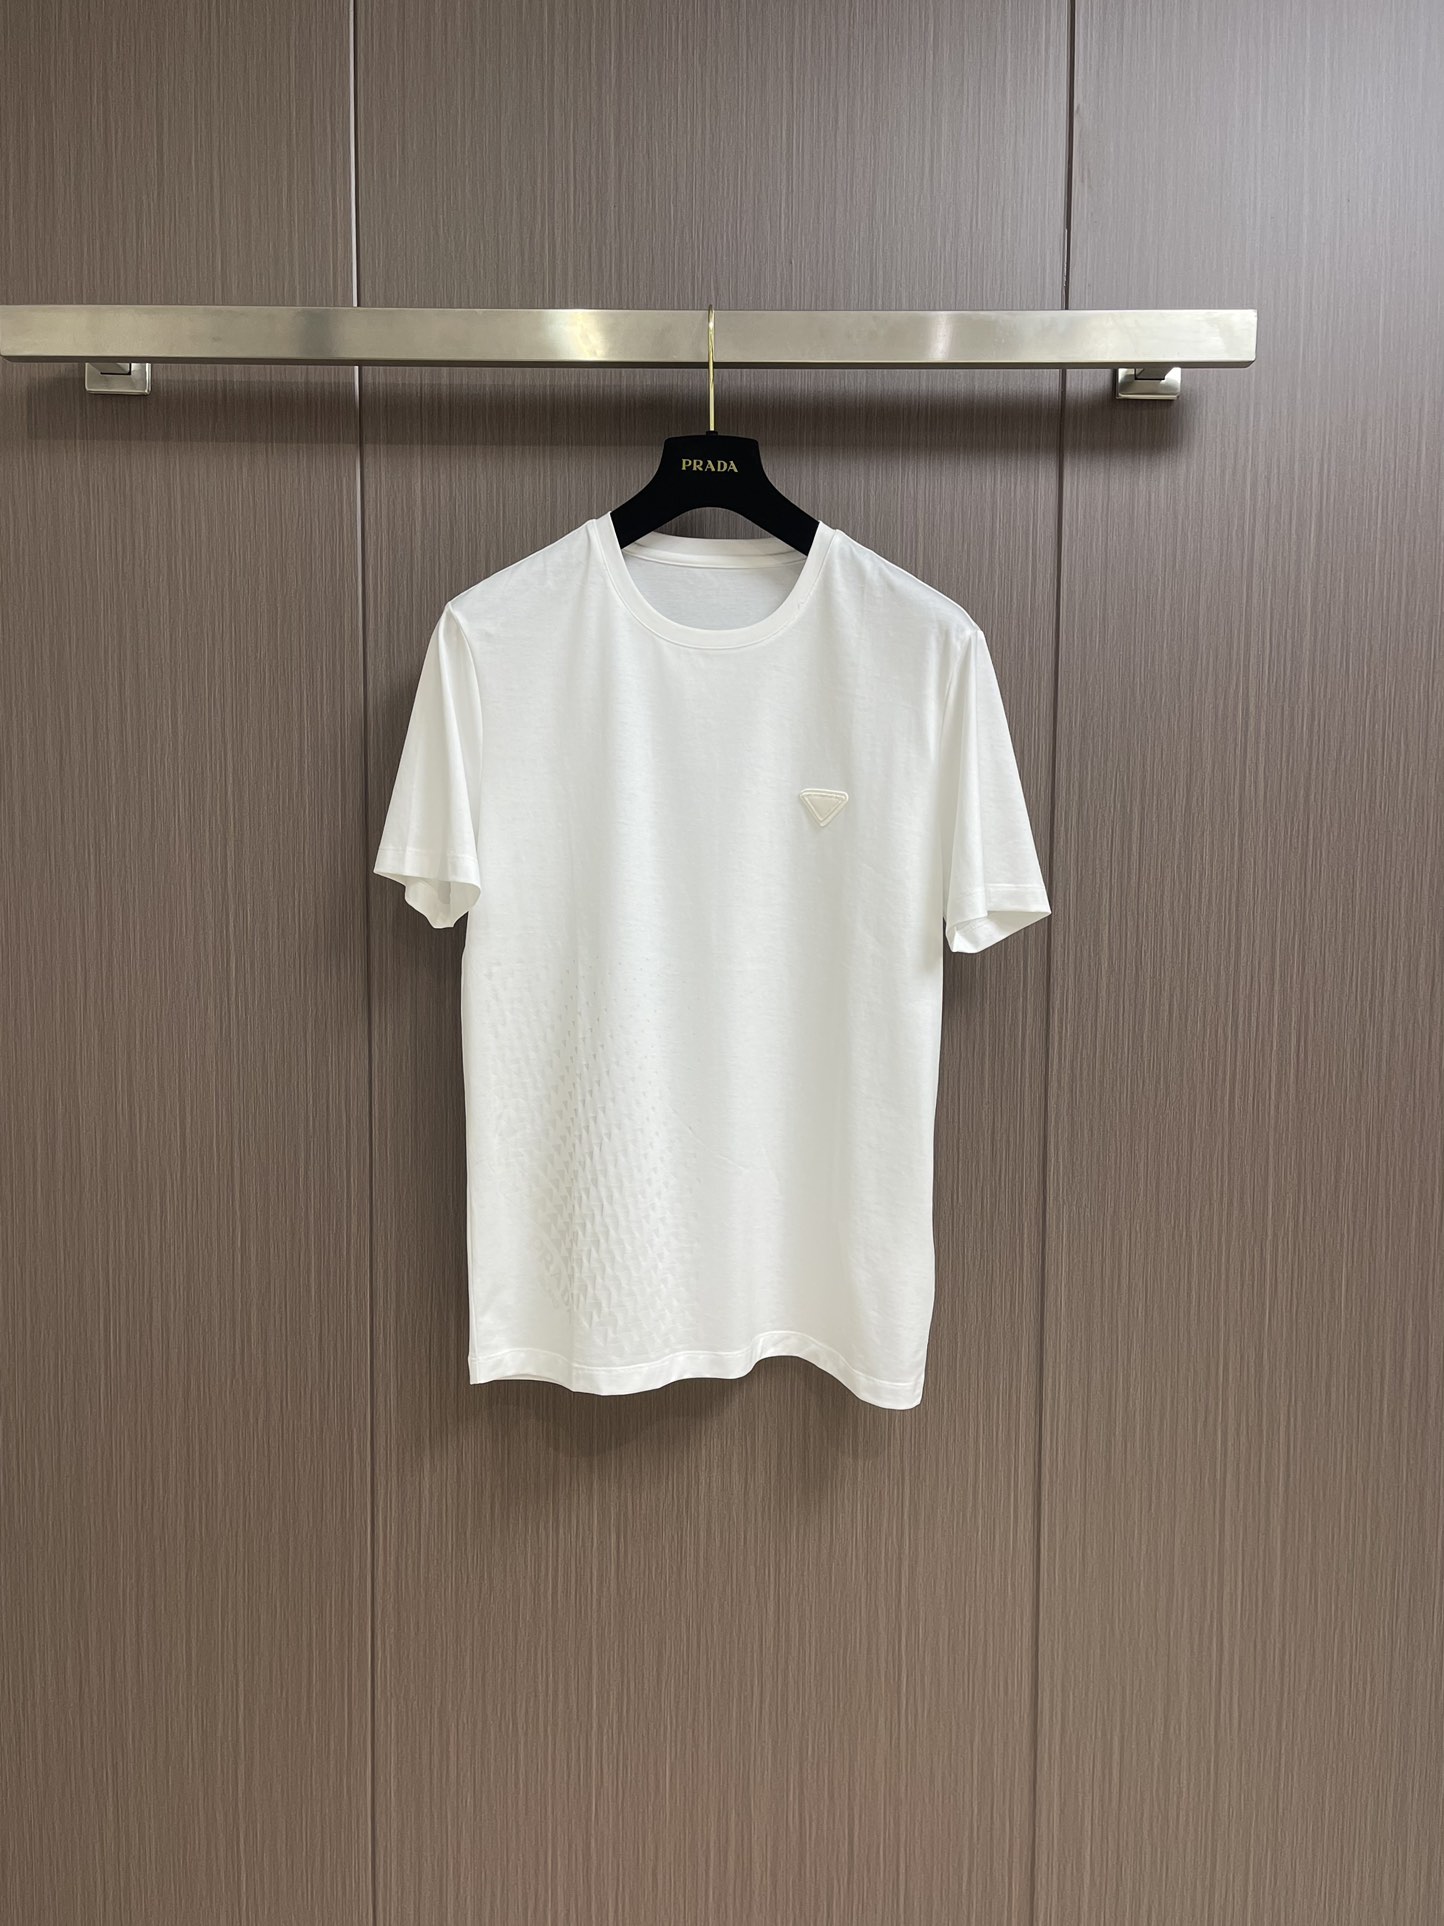 Prada Clothing T-Shirt Printing Cotton Mercerized Spring/Summer Collection Fashion Short Sleeve